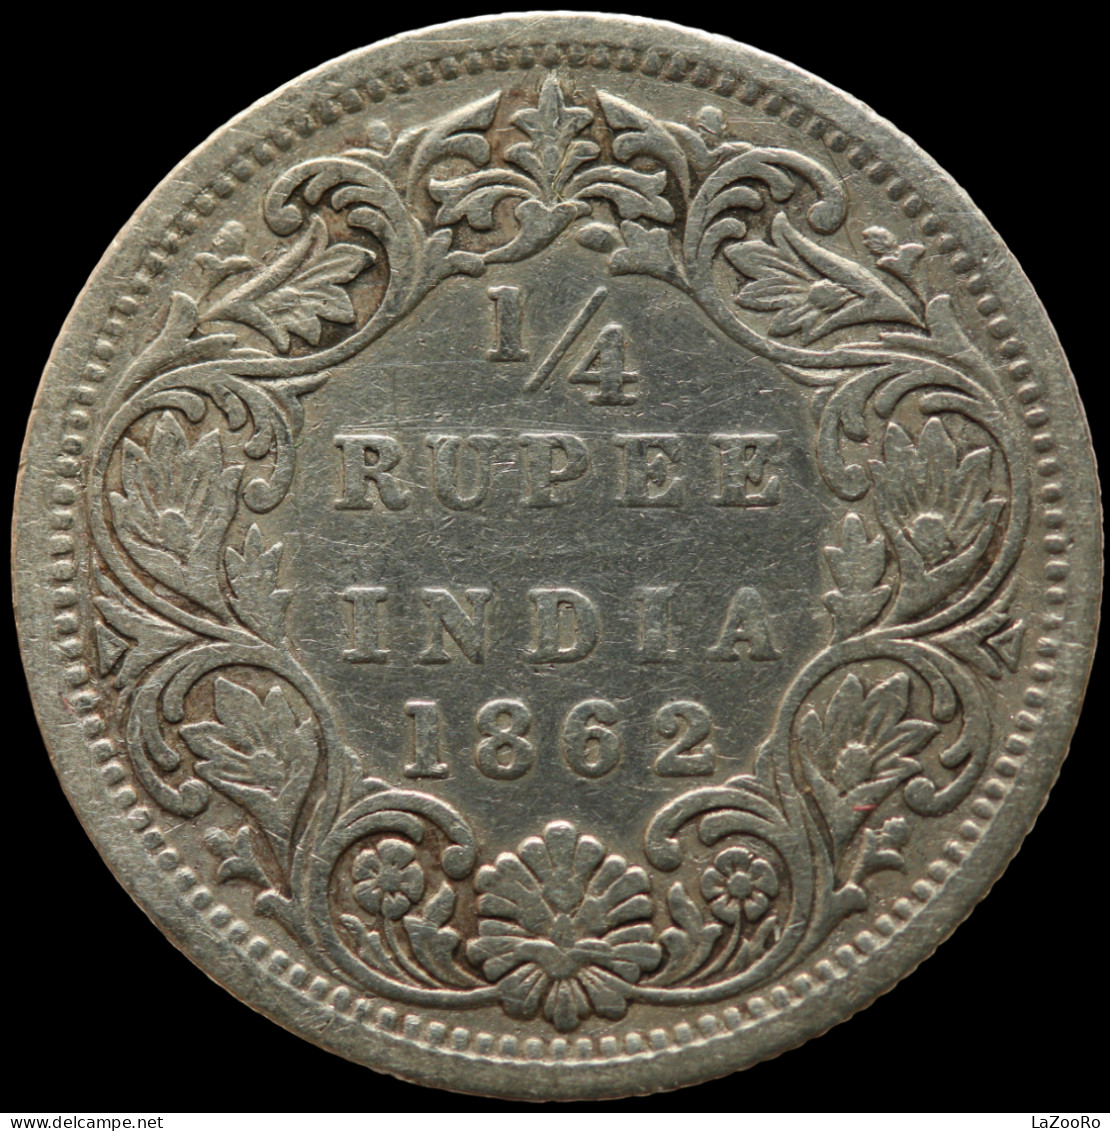 LaZooRo: British India 1/4 Rupee 1862 VF - Silver - Colonies